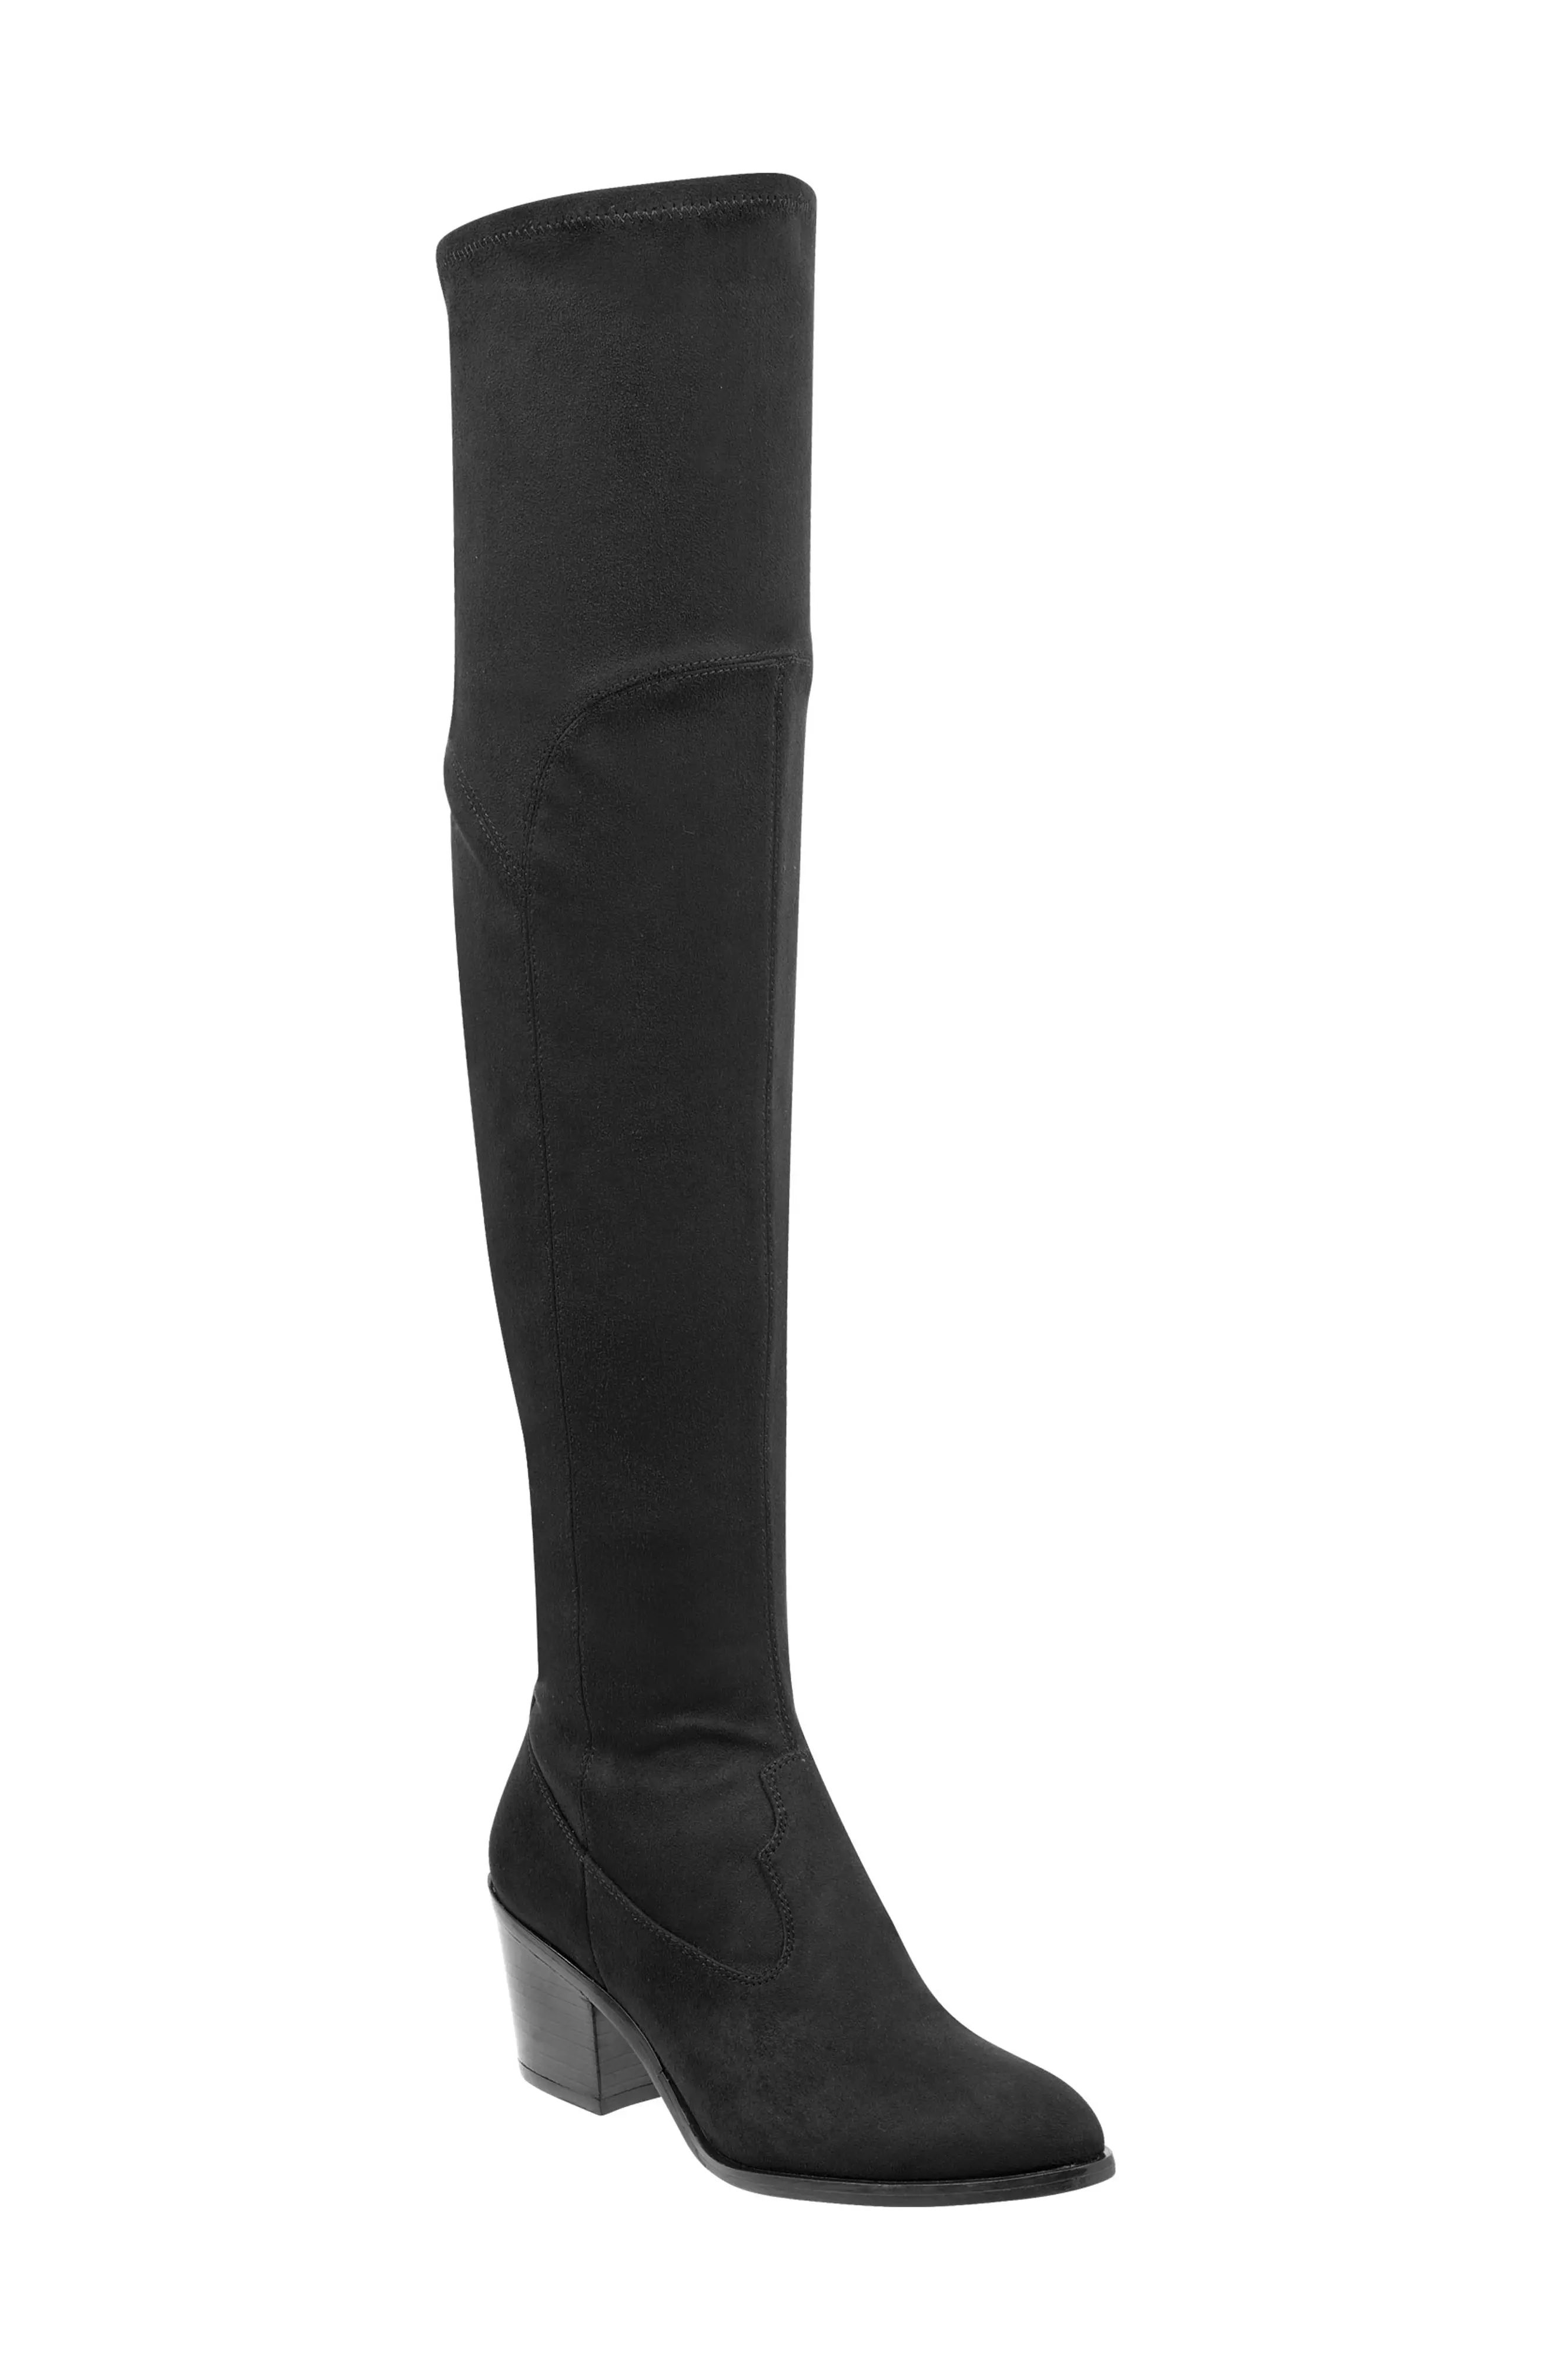 Women's Marc Fisher Ltd Rossa Over The Knee Boot, Size 5 M - Black | Nordstrom